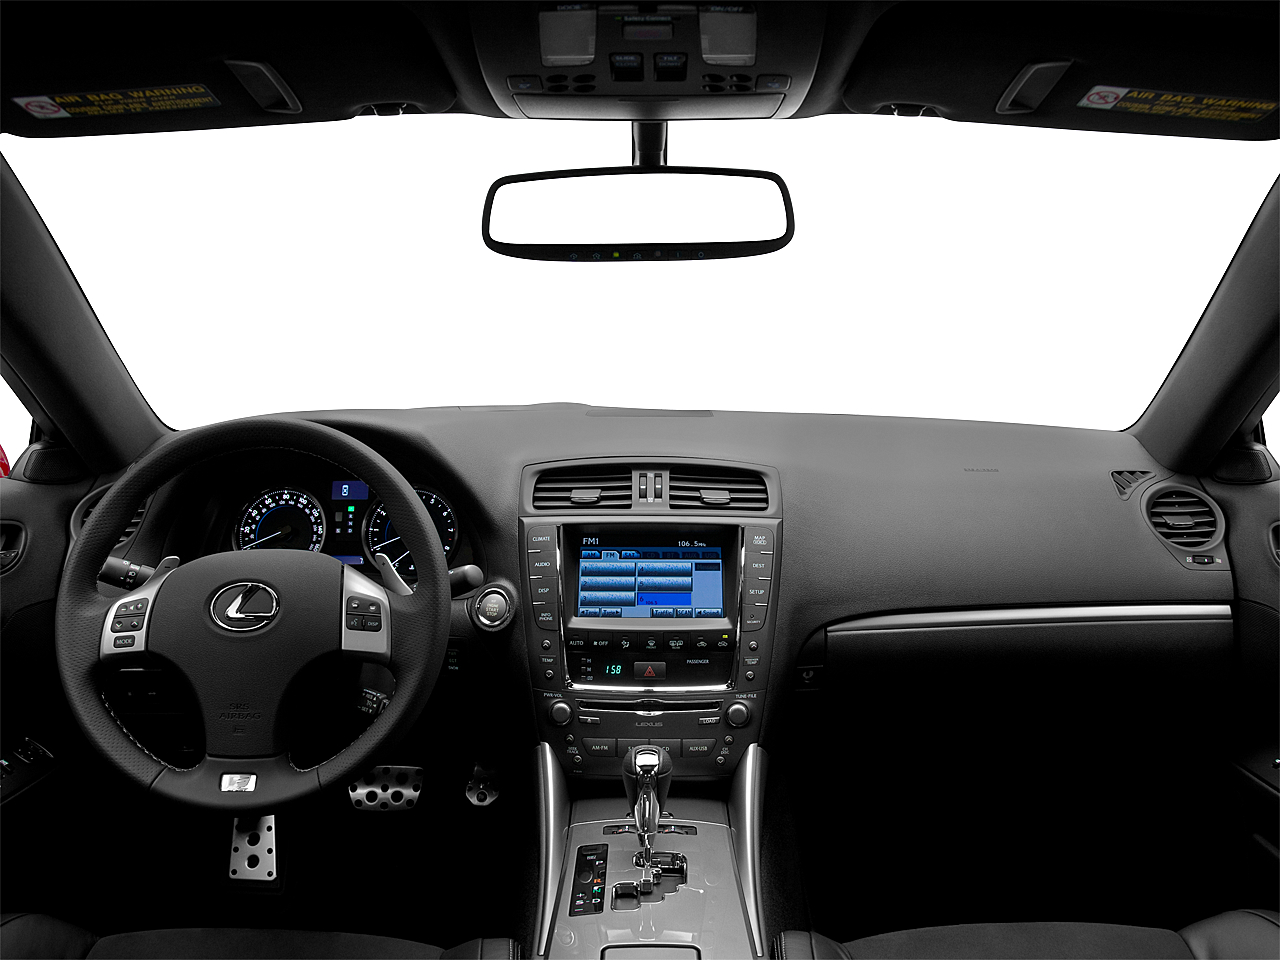 2011 Lexus IS 250 4dr Sedan 6M - Research - GrooveCar